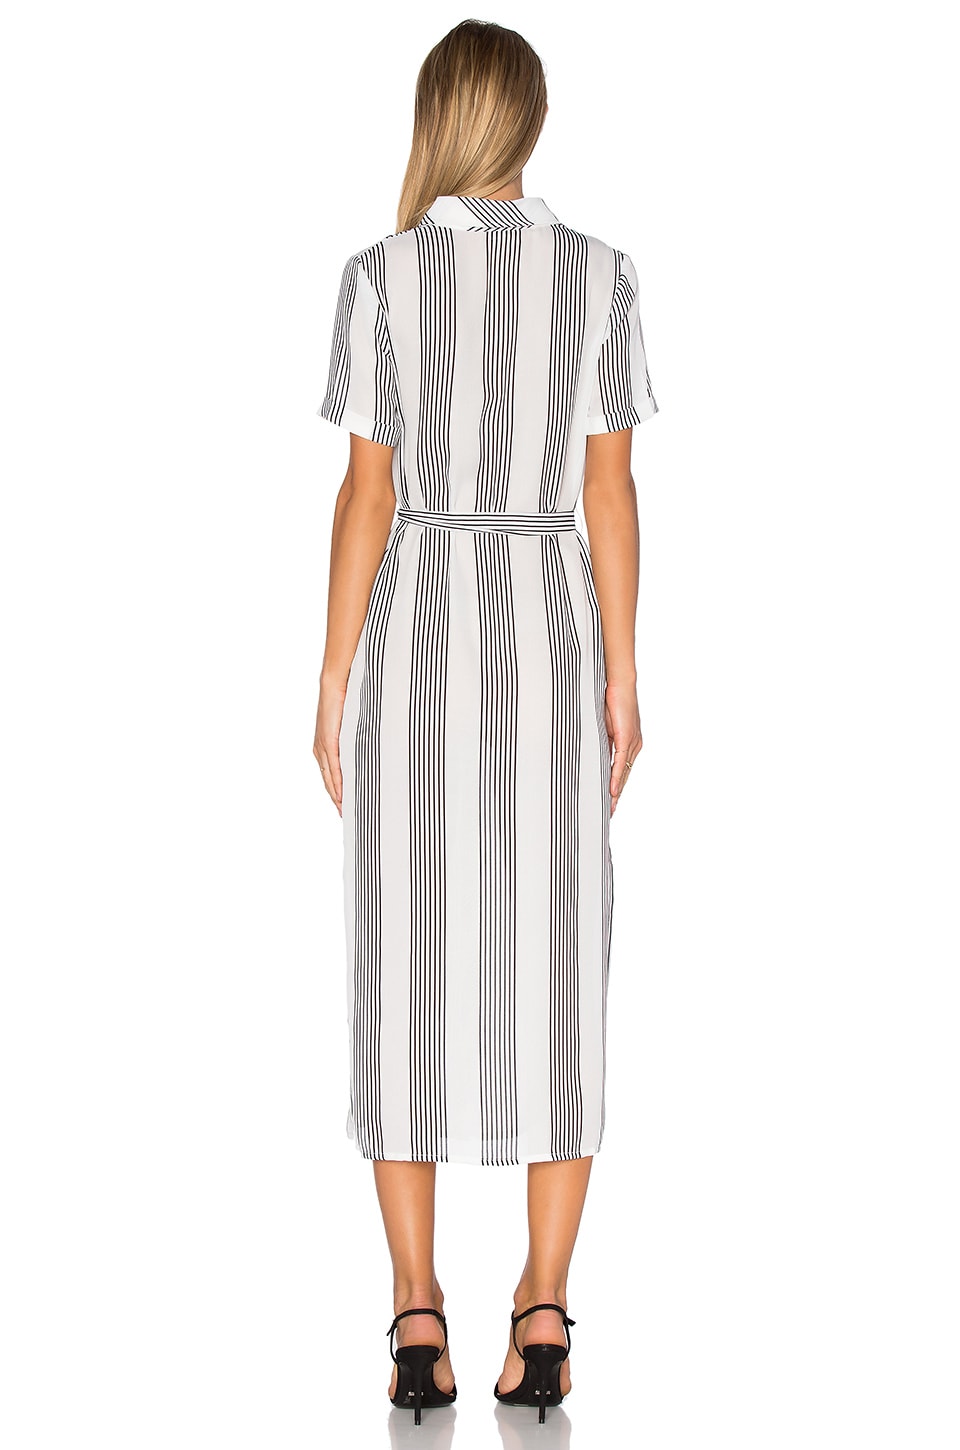 GLAMOROUS Button Up Dress in White Chiffon Stripe | REVOLVE